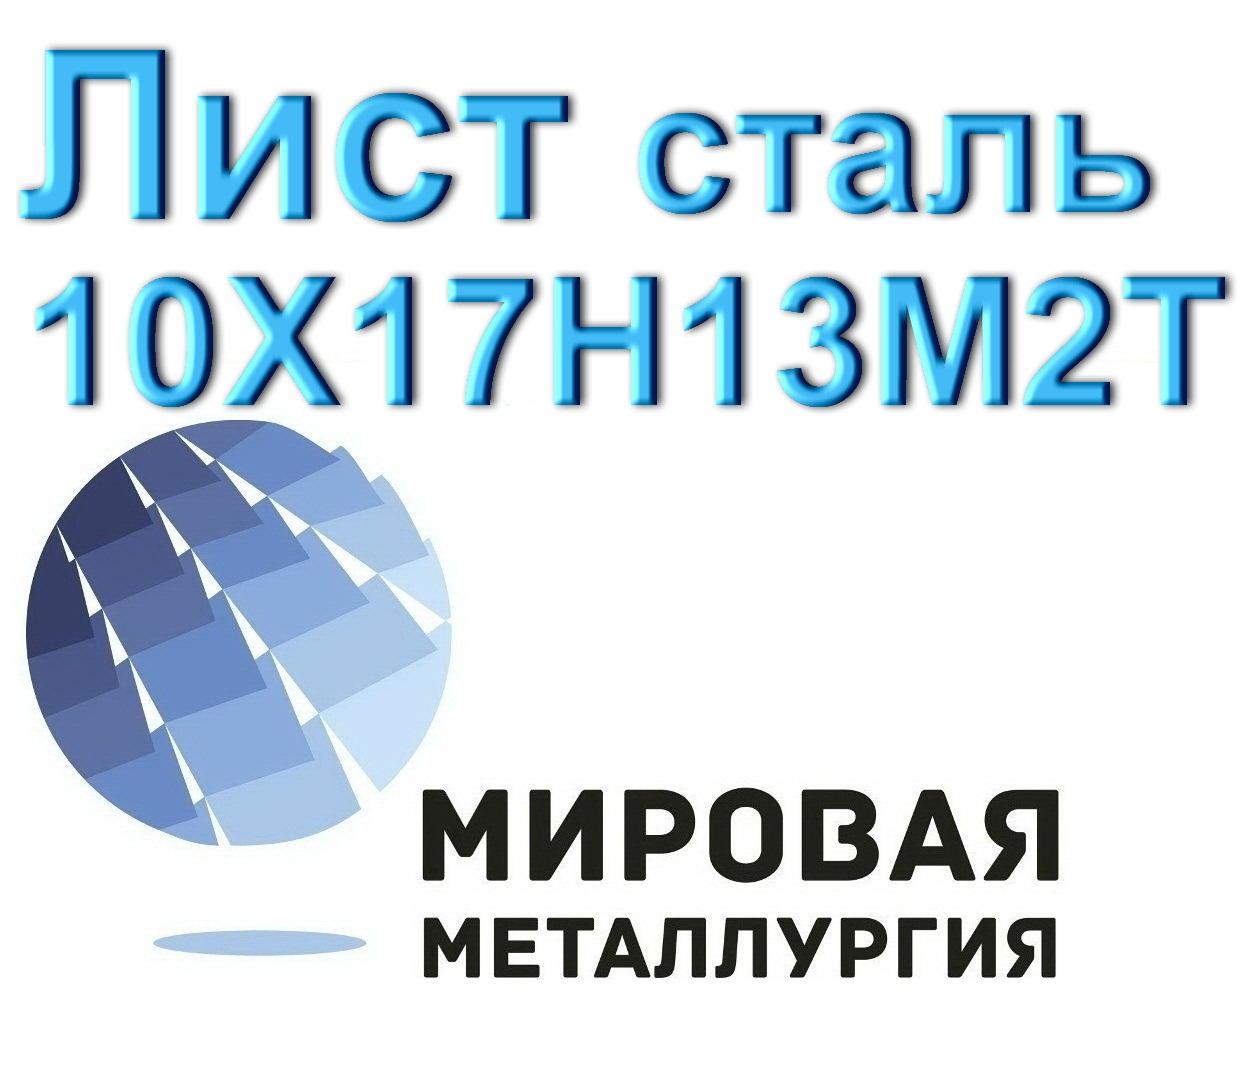 Лист сталь 10Х17Н13М2Т, Севастополь